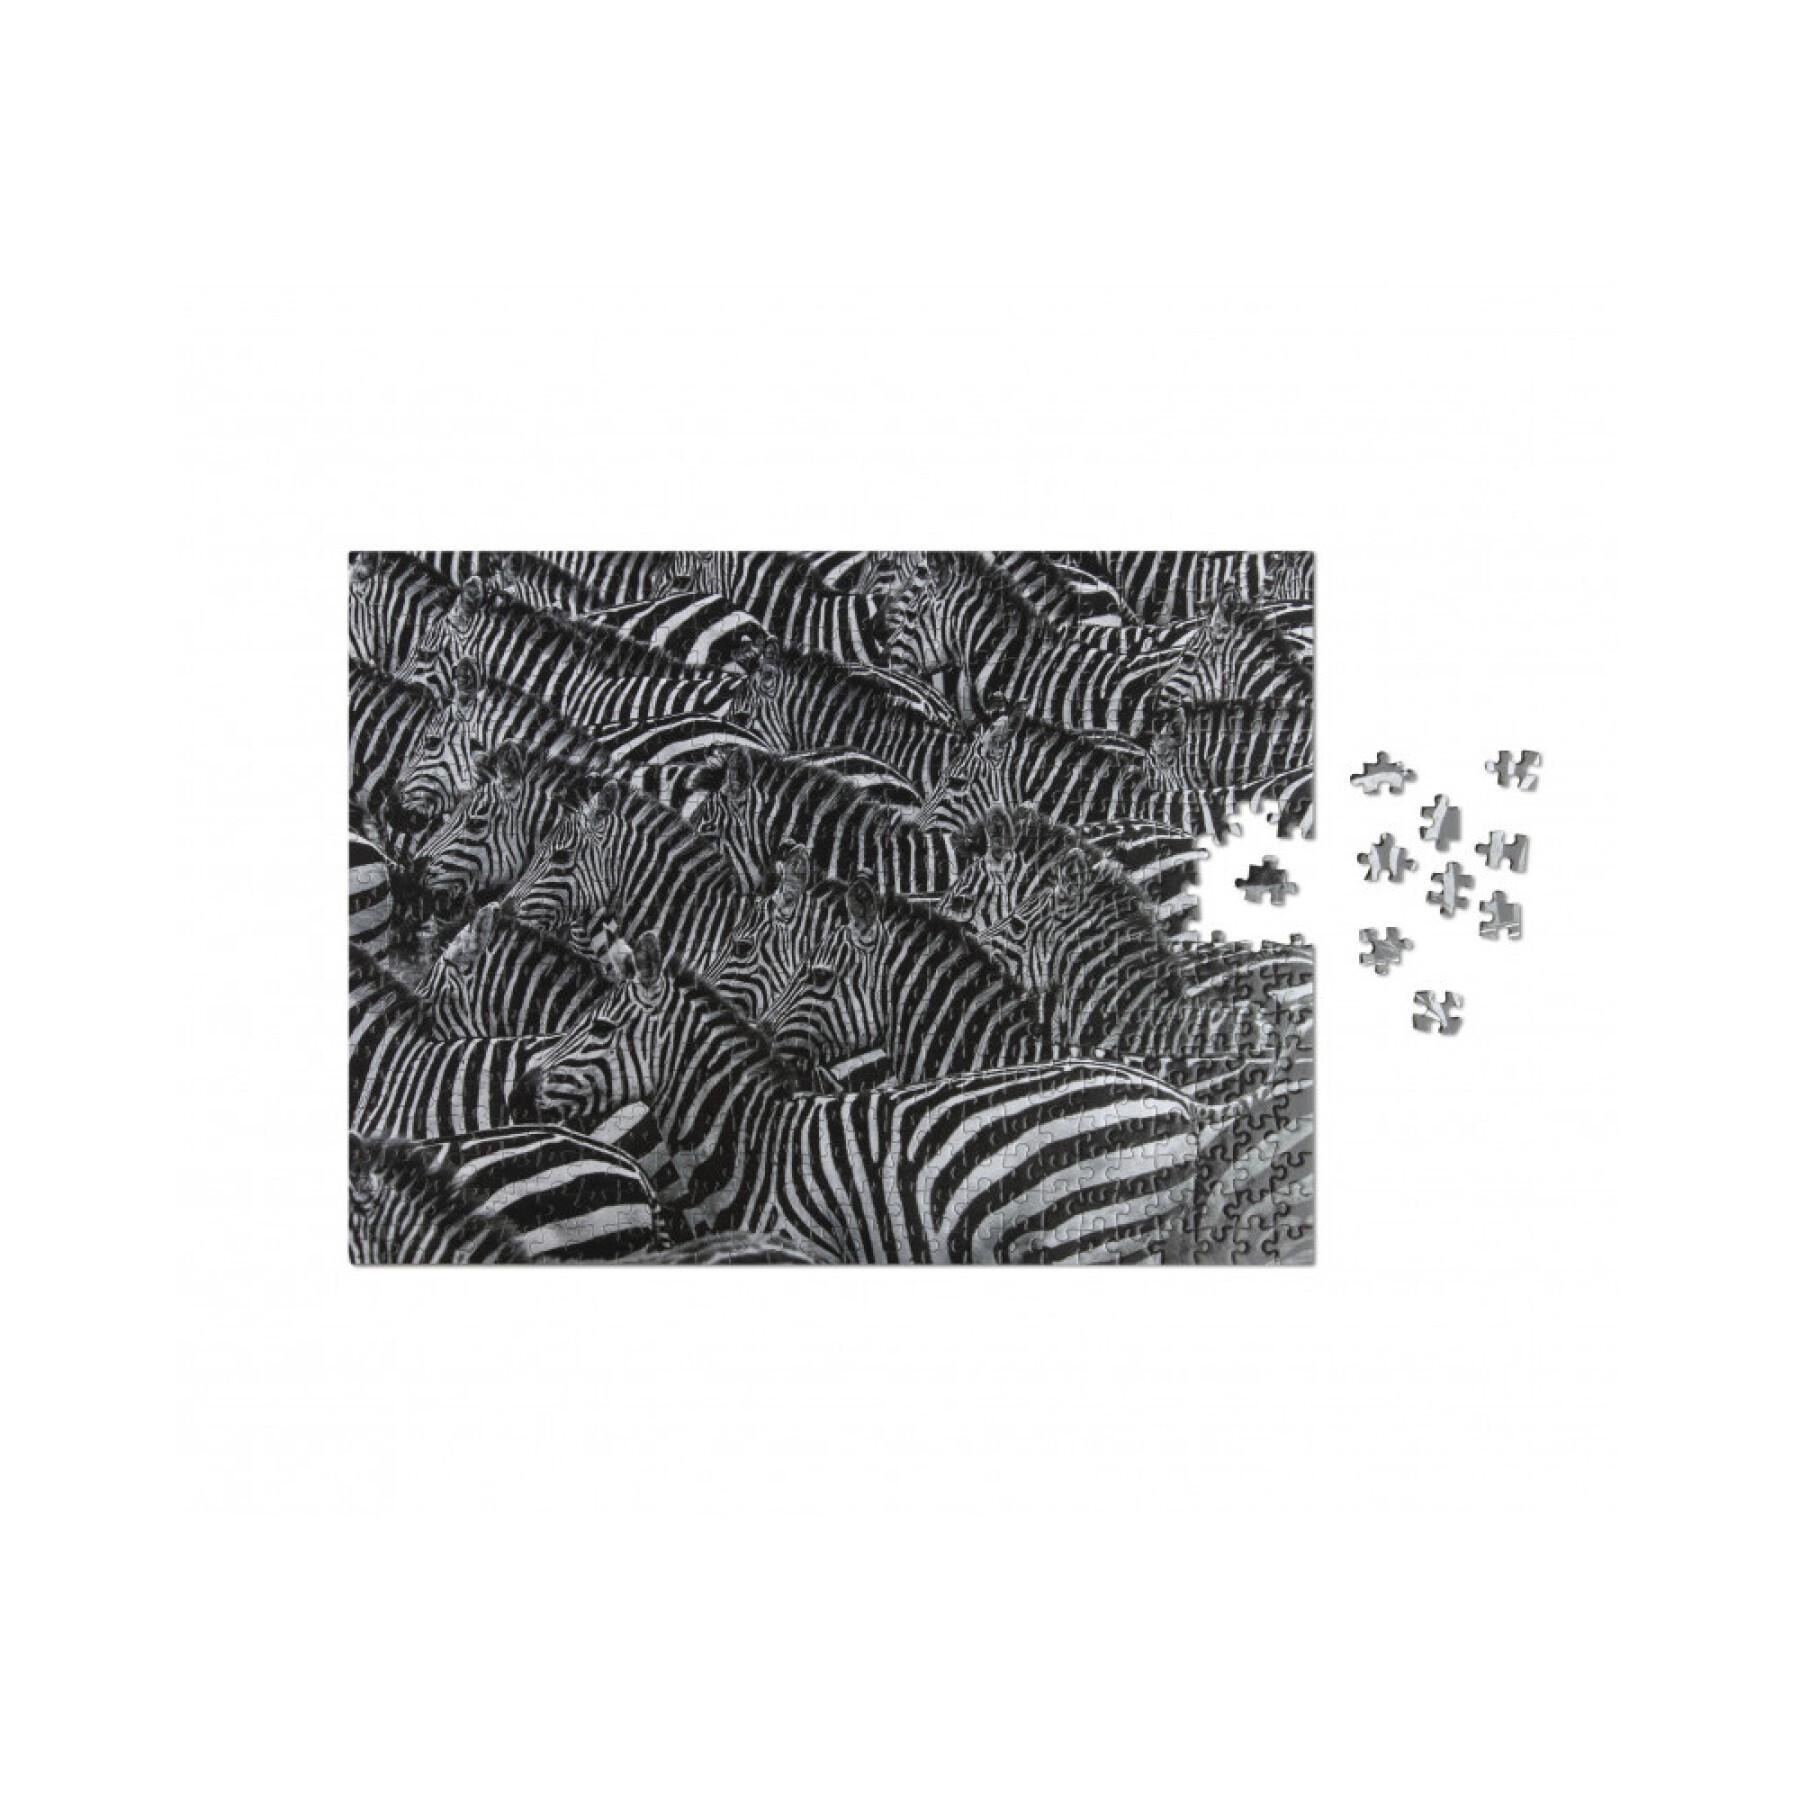 Puzzle Printworks Zebra